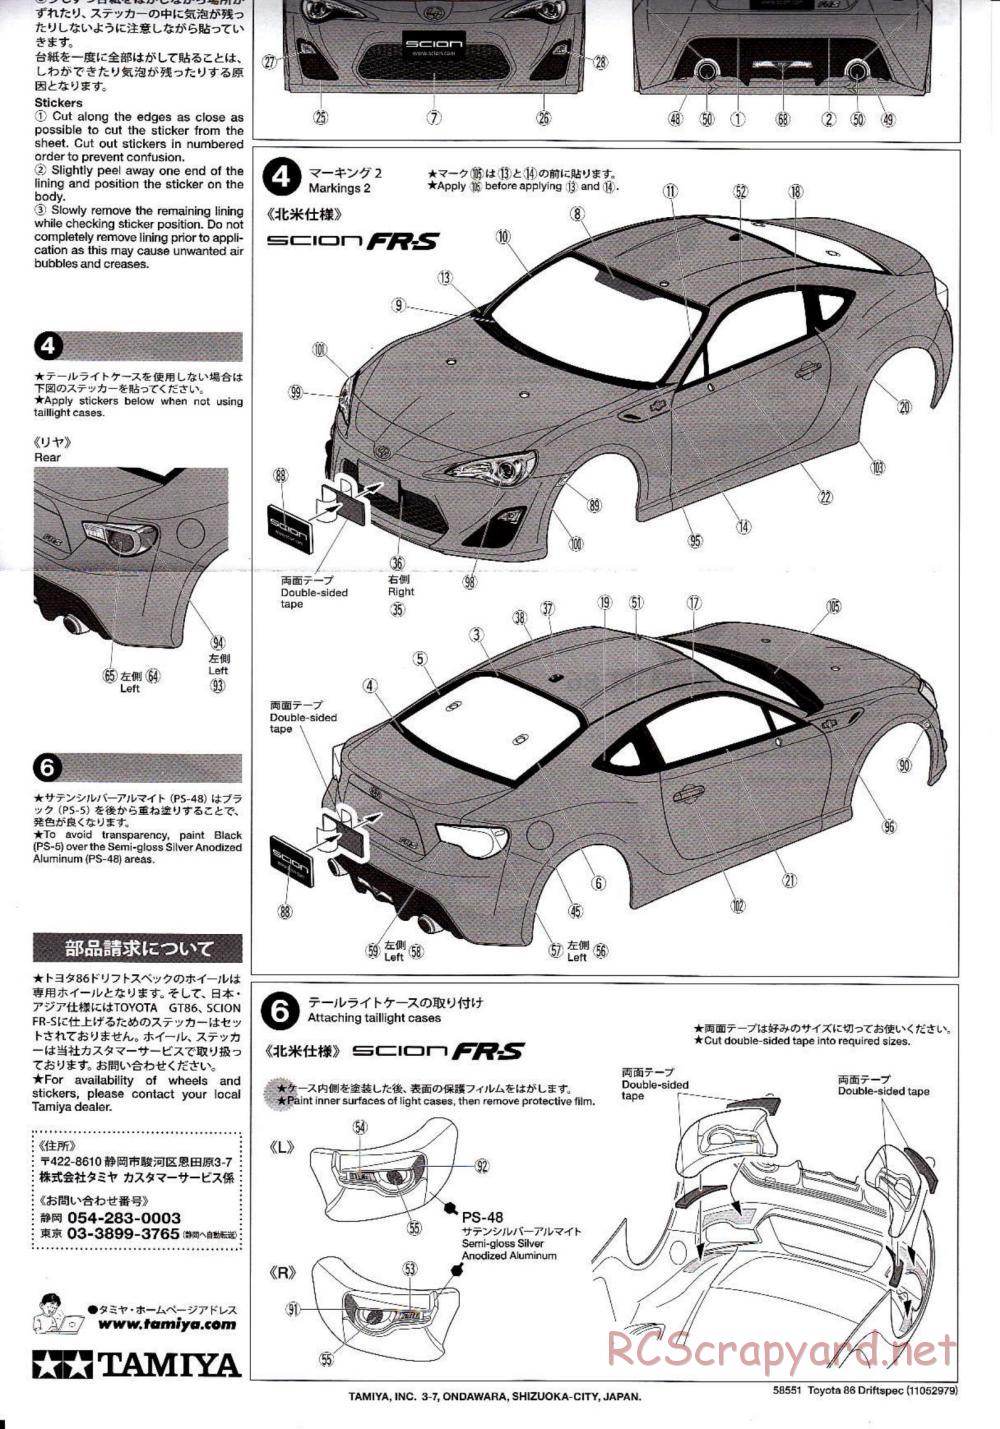 Tamiya - Toyota 86 - Drift Spec - TT-01ED Chassis - Body Manual - Page 4